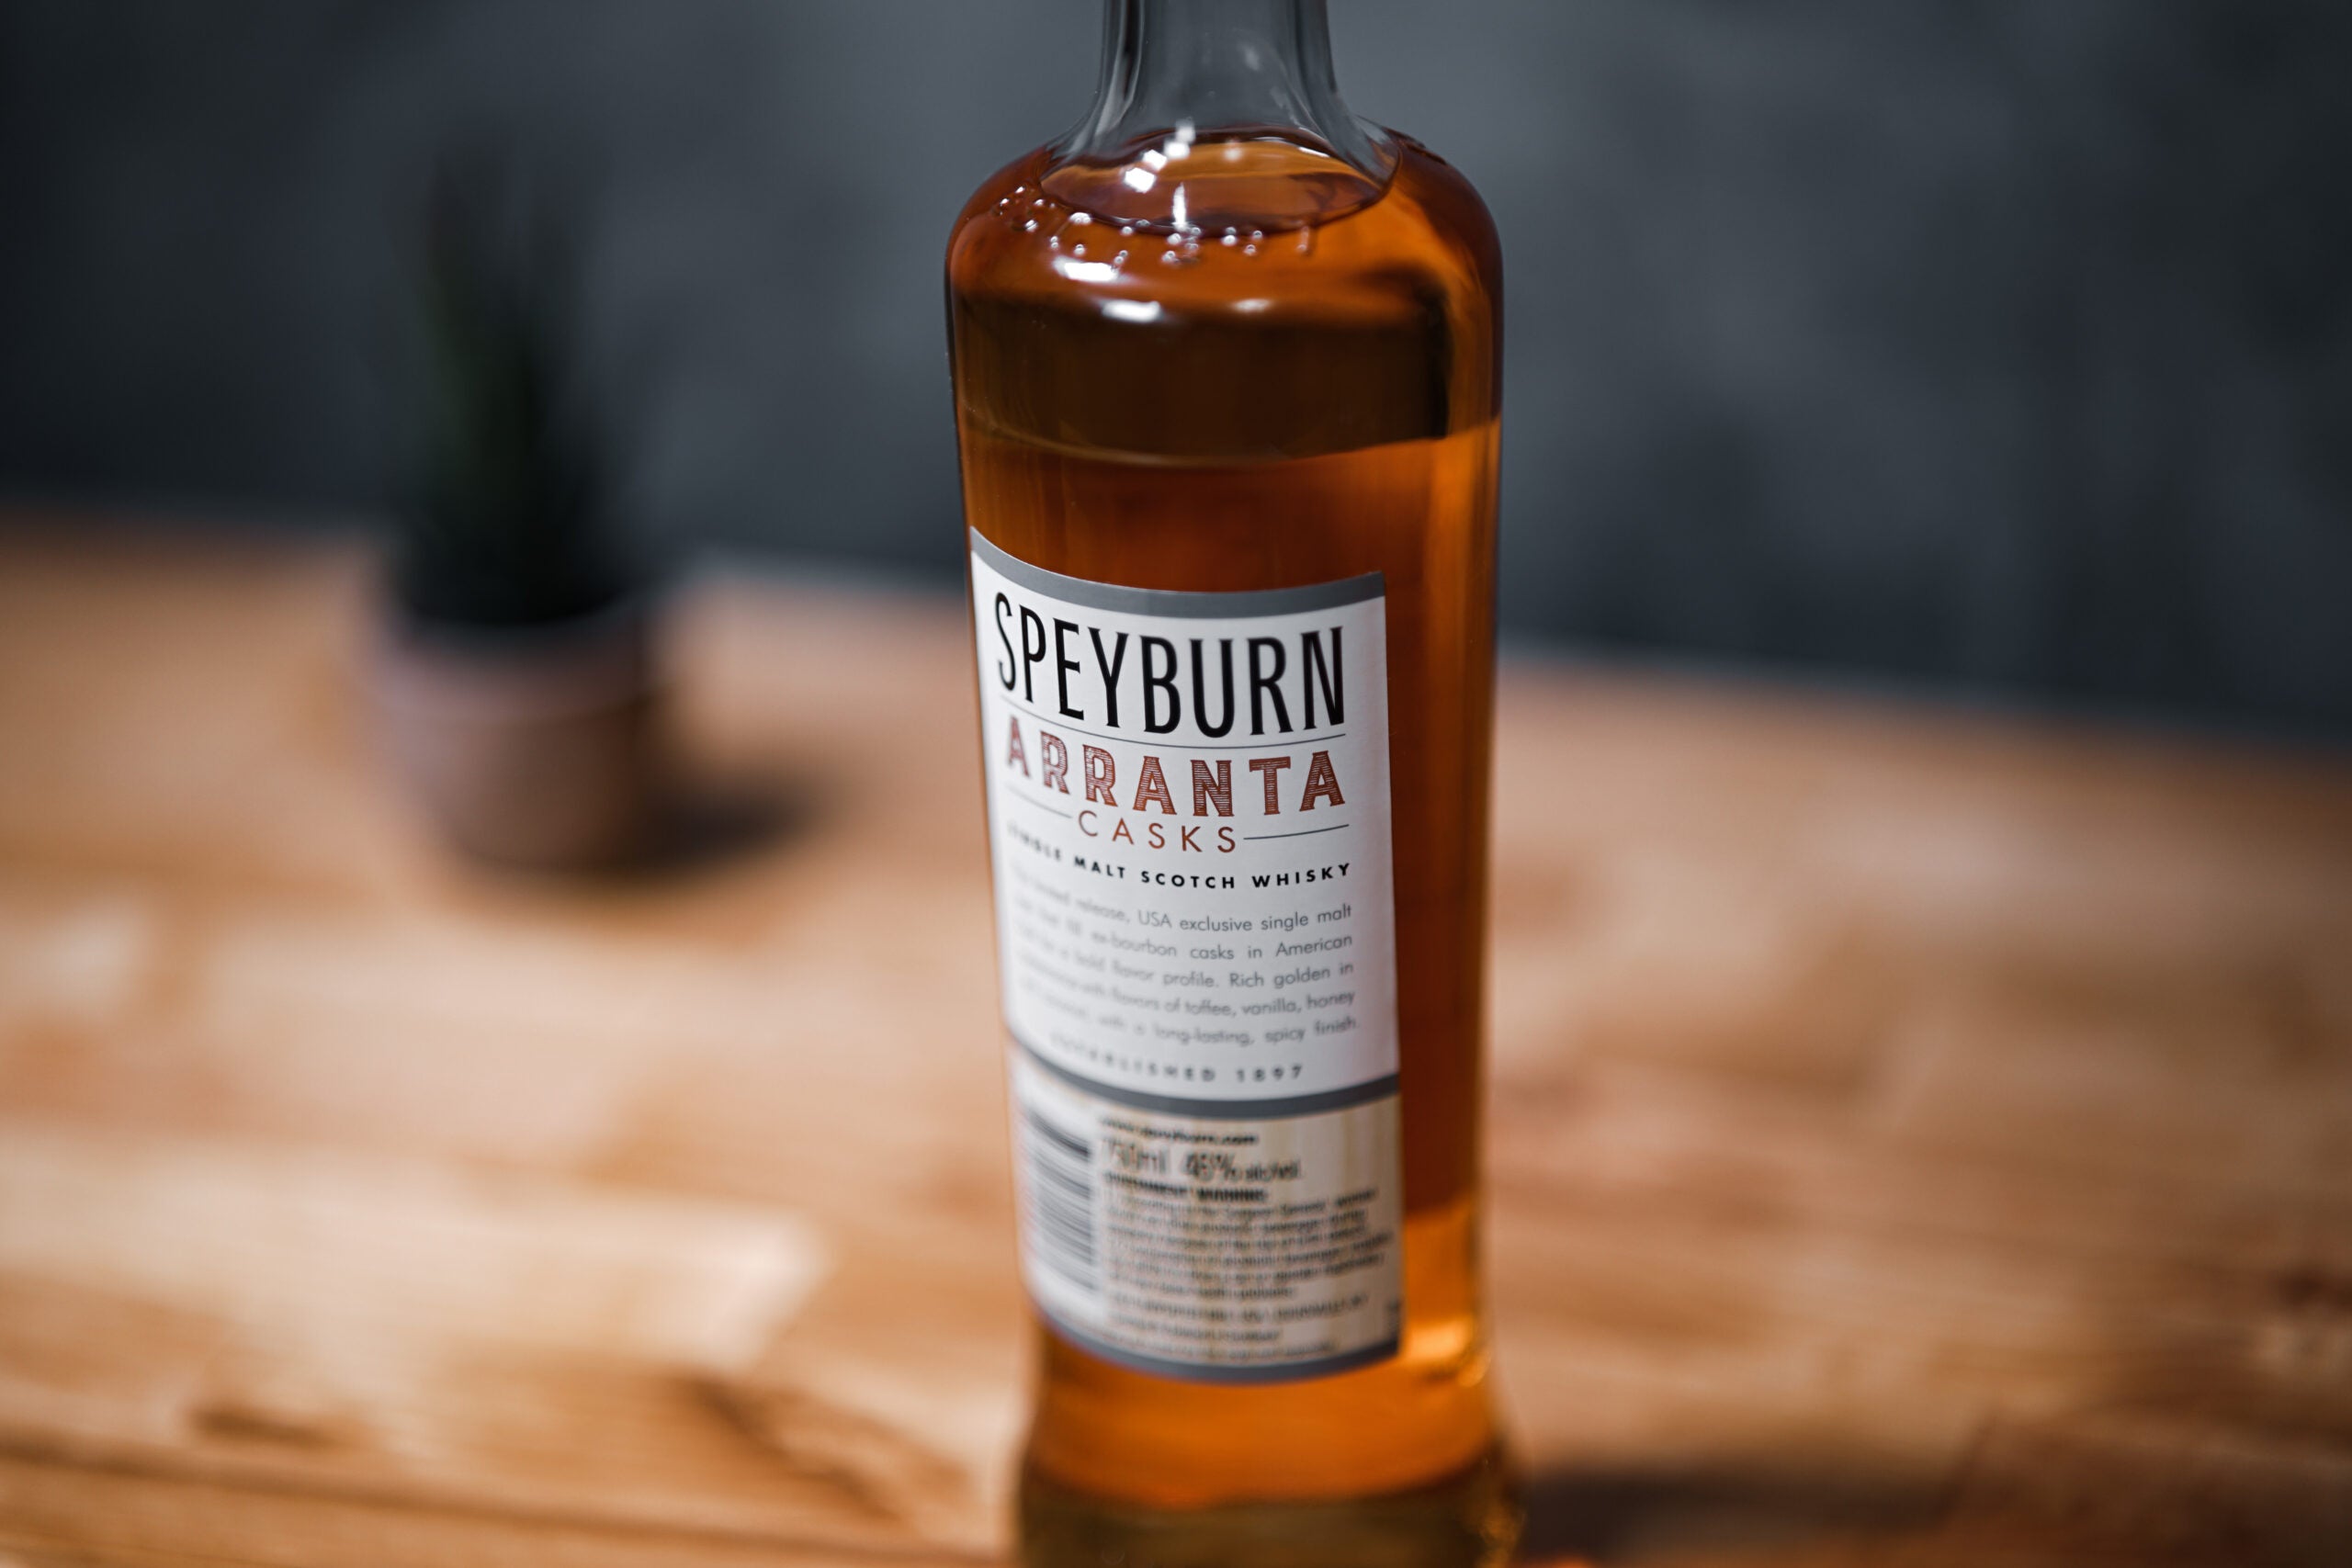 Speyburn Arranta Casks Whisky